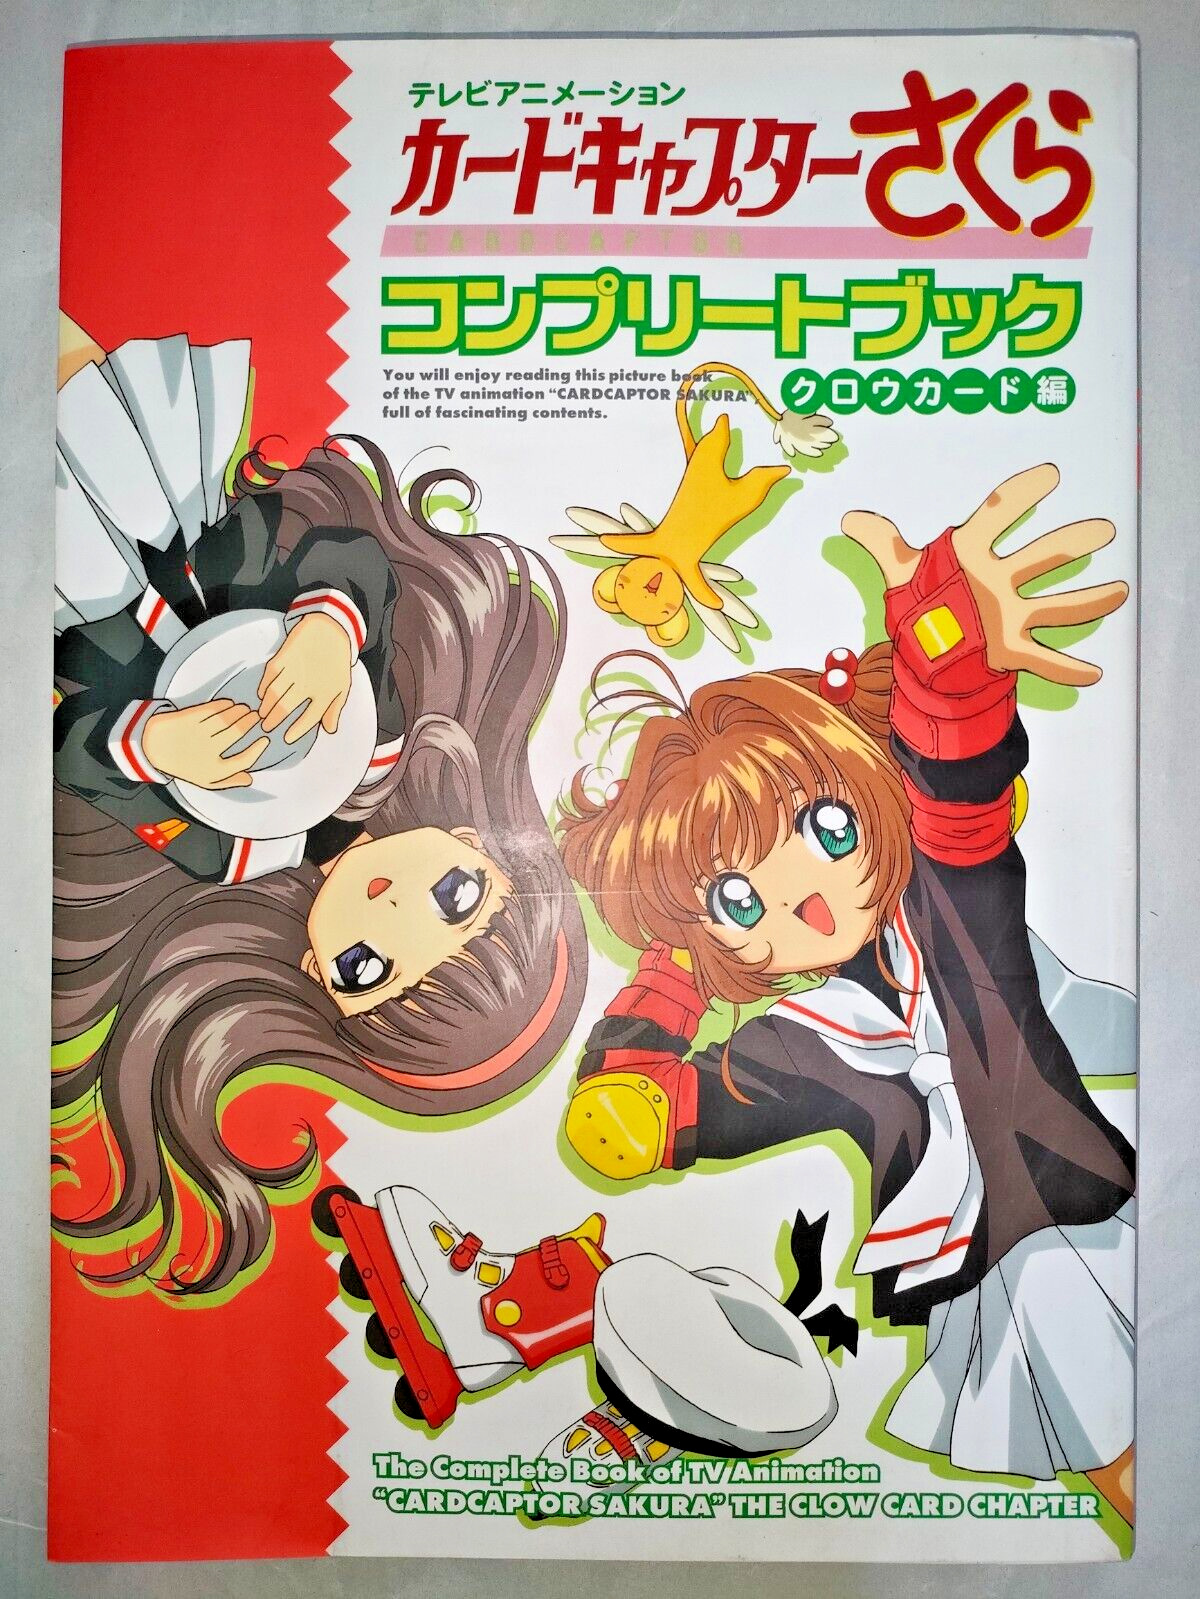 Cardcaptor Sakura Complete Book Clow Card Edition w/Poster & Post card 1st edi.